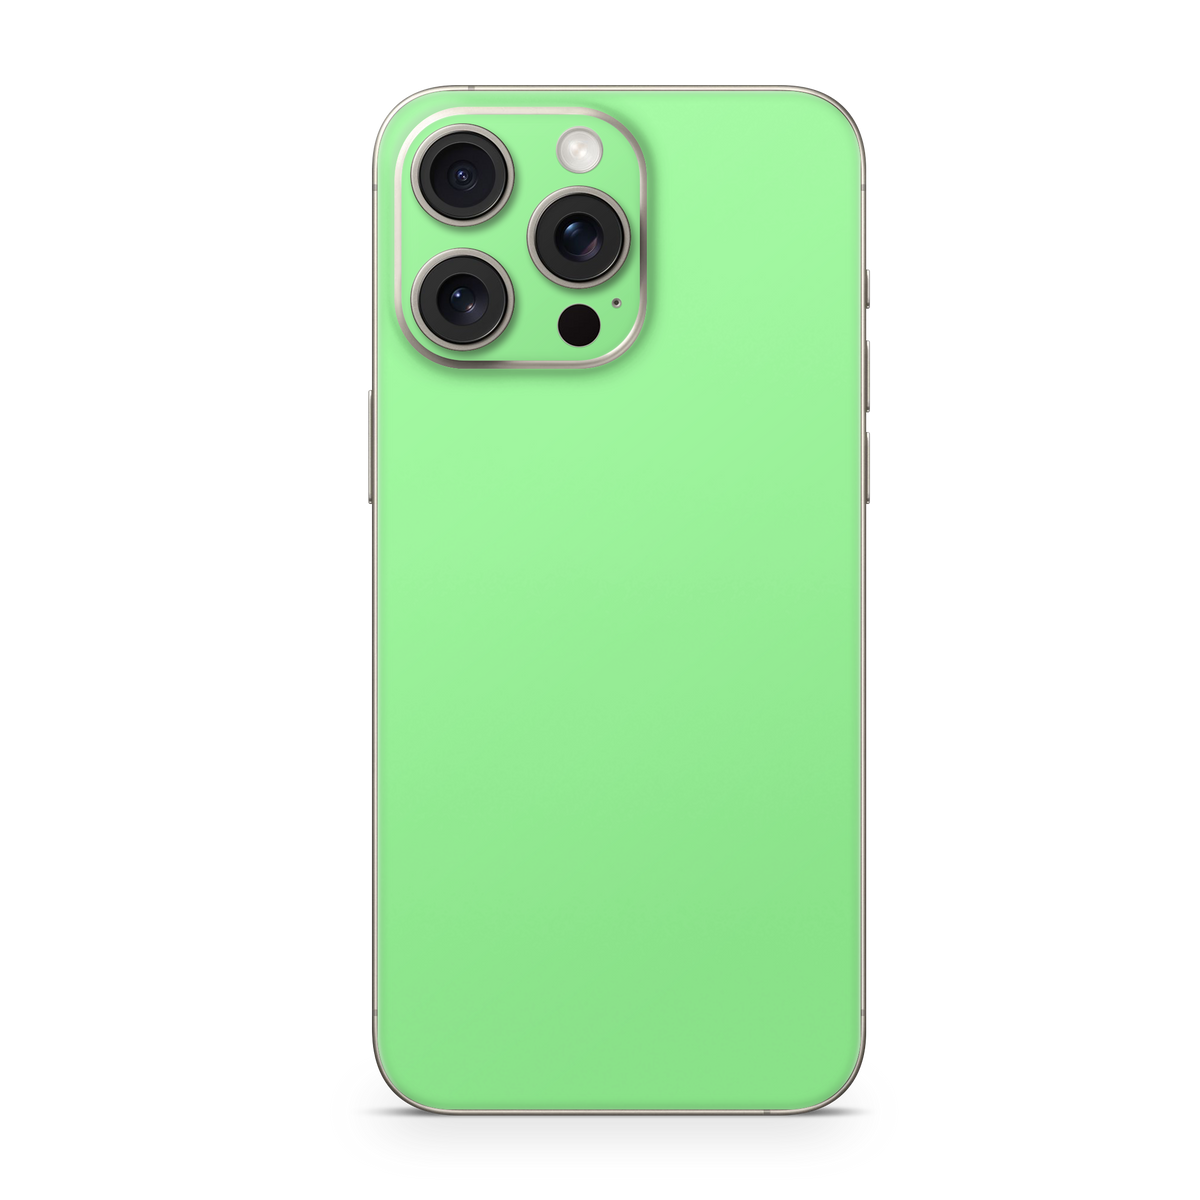 Apple iPhone Mint Green Skin